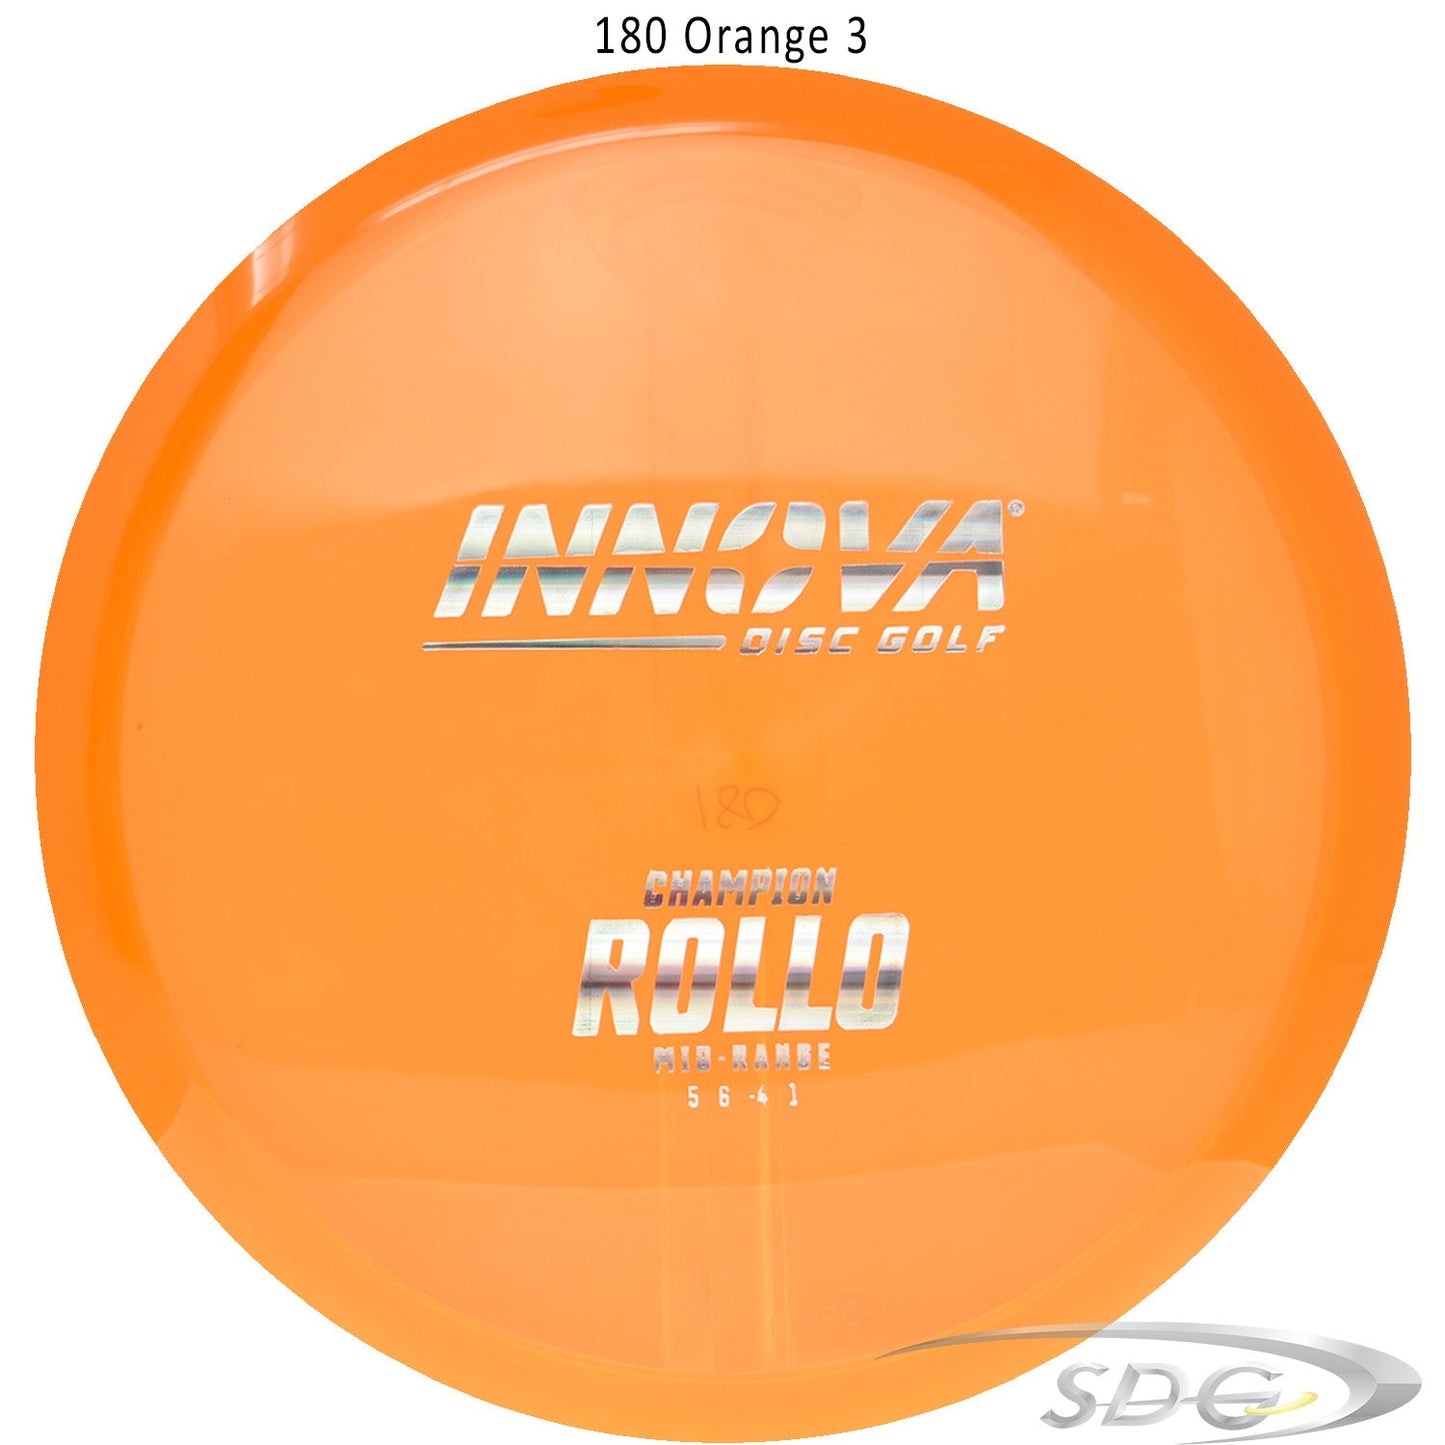 innova-champion-rollo-disc-golf-mid-range 180 Orange 3 